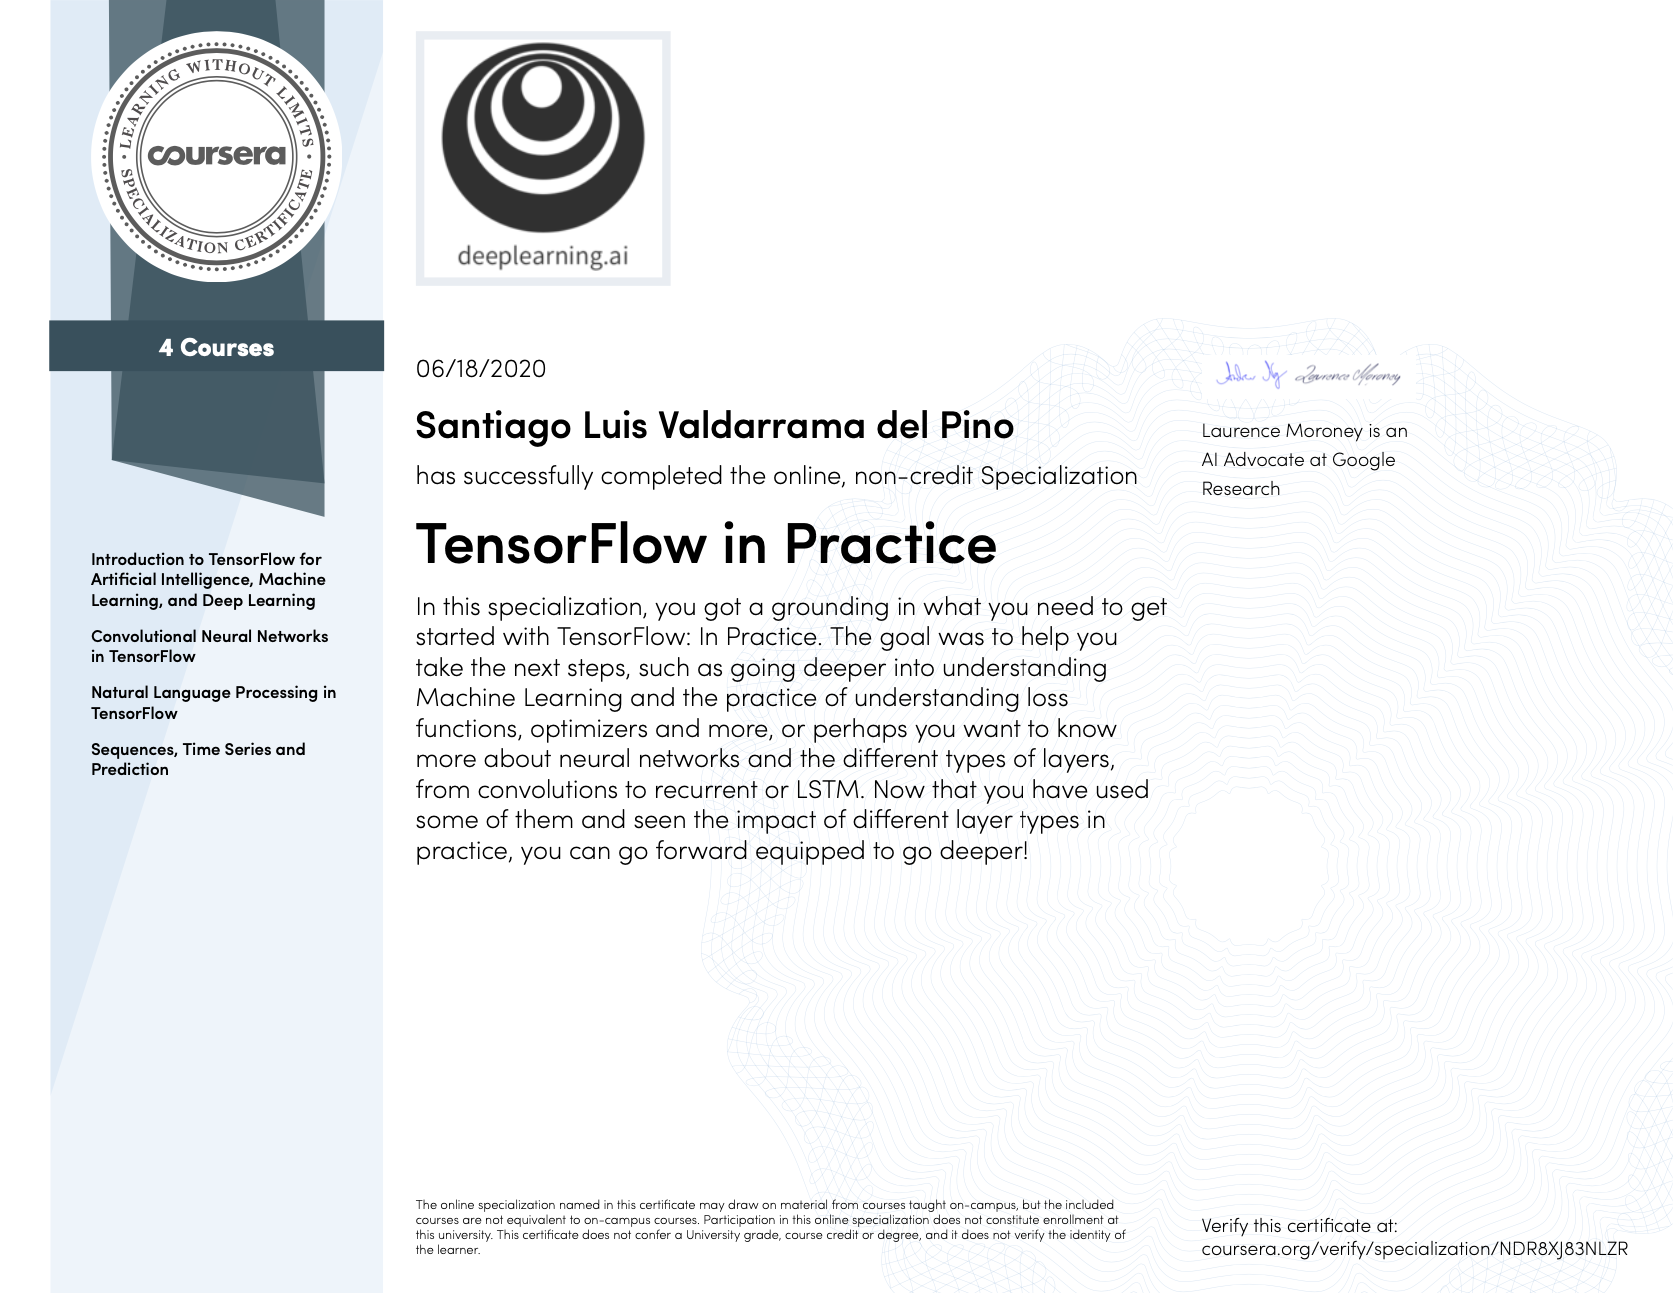 tensorflow-in-practice.png